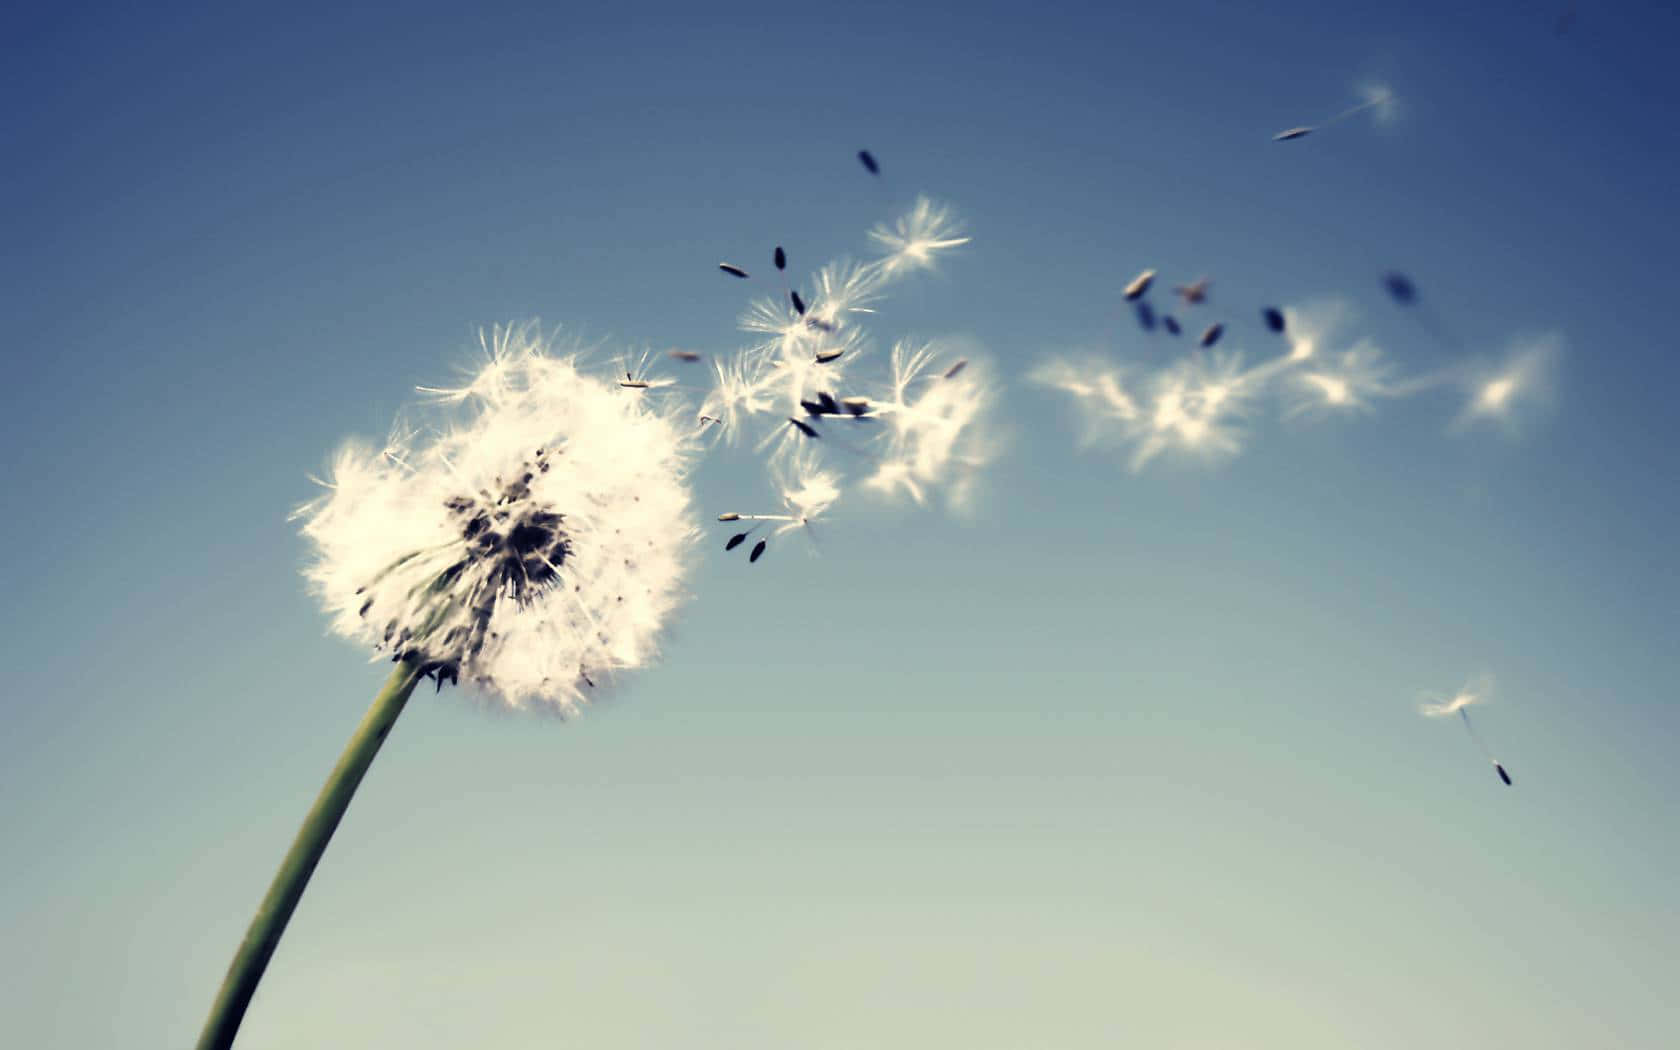 A Beautiful Dandelion Gently Blowing in the Wind